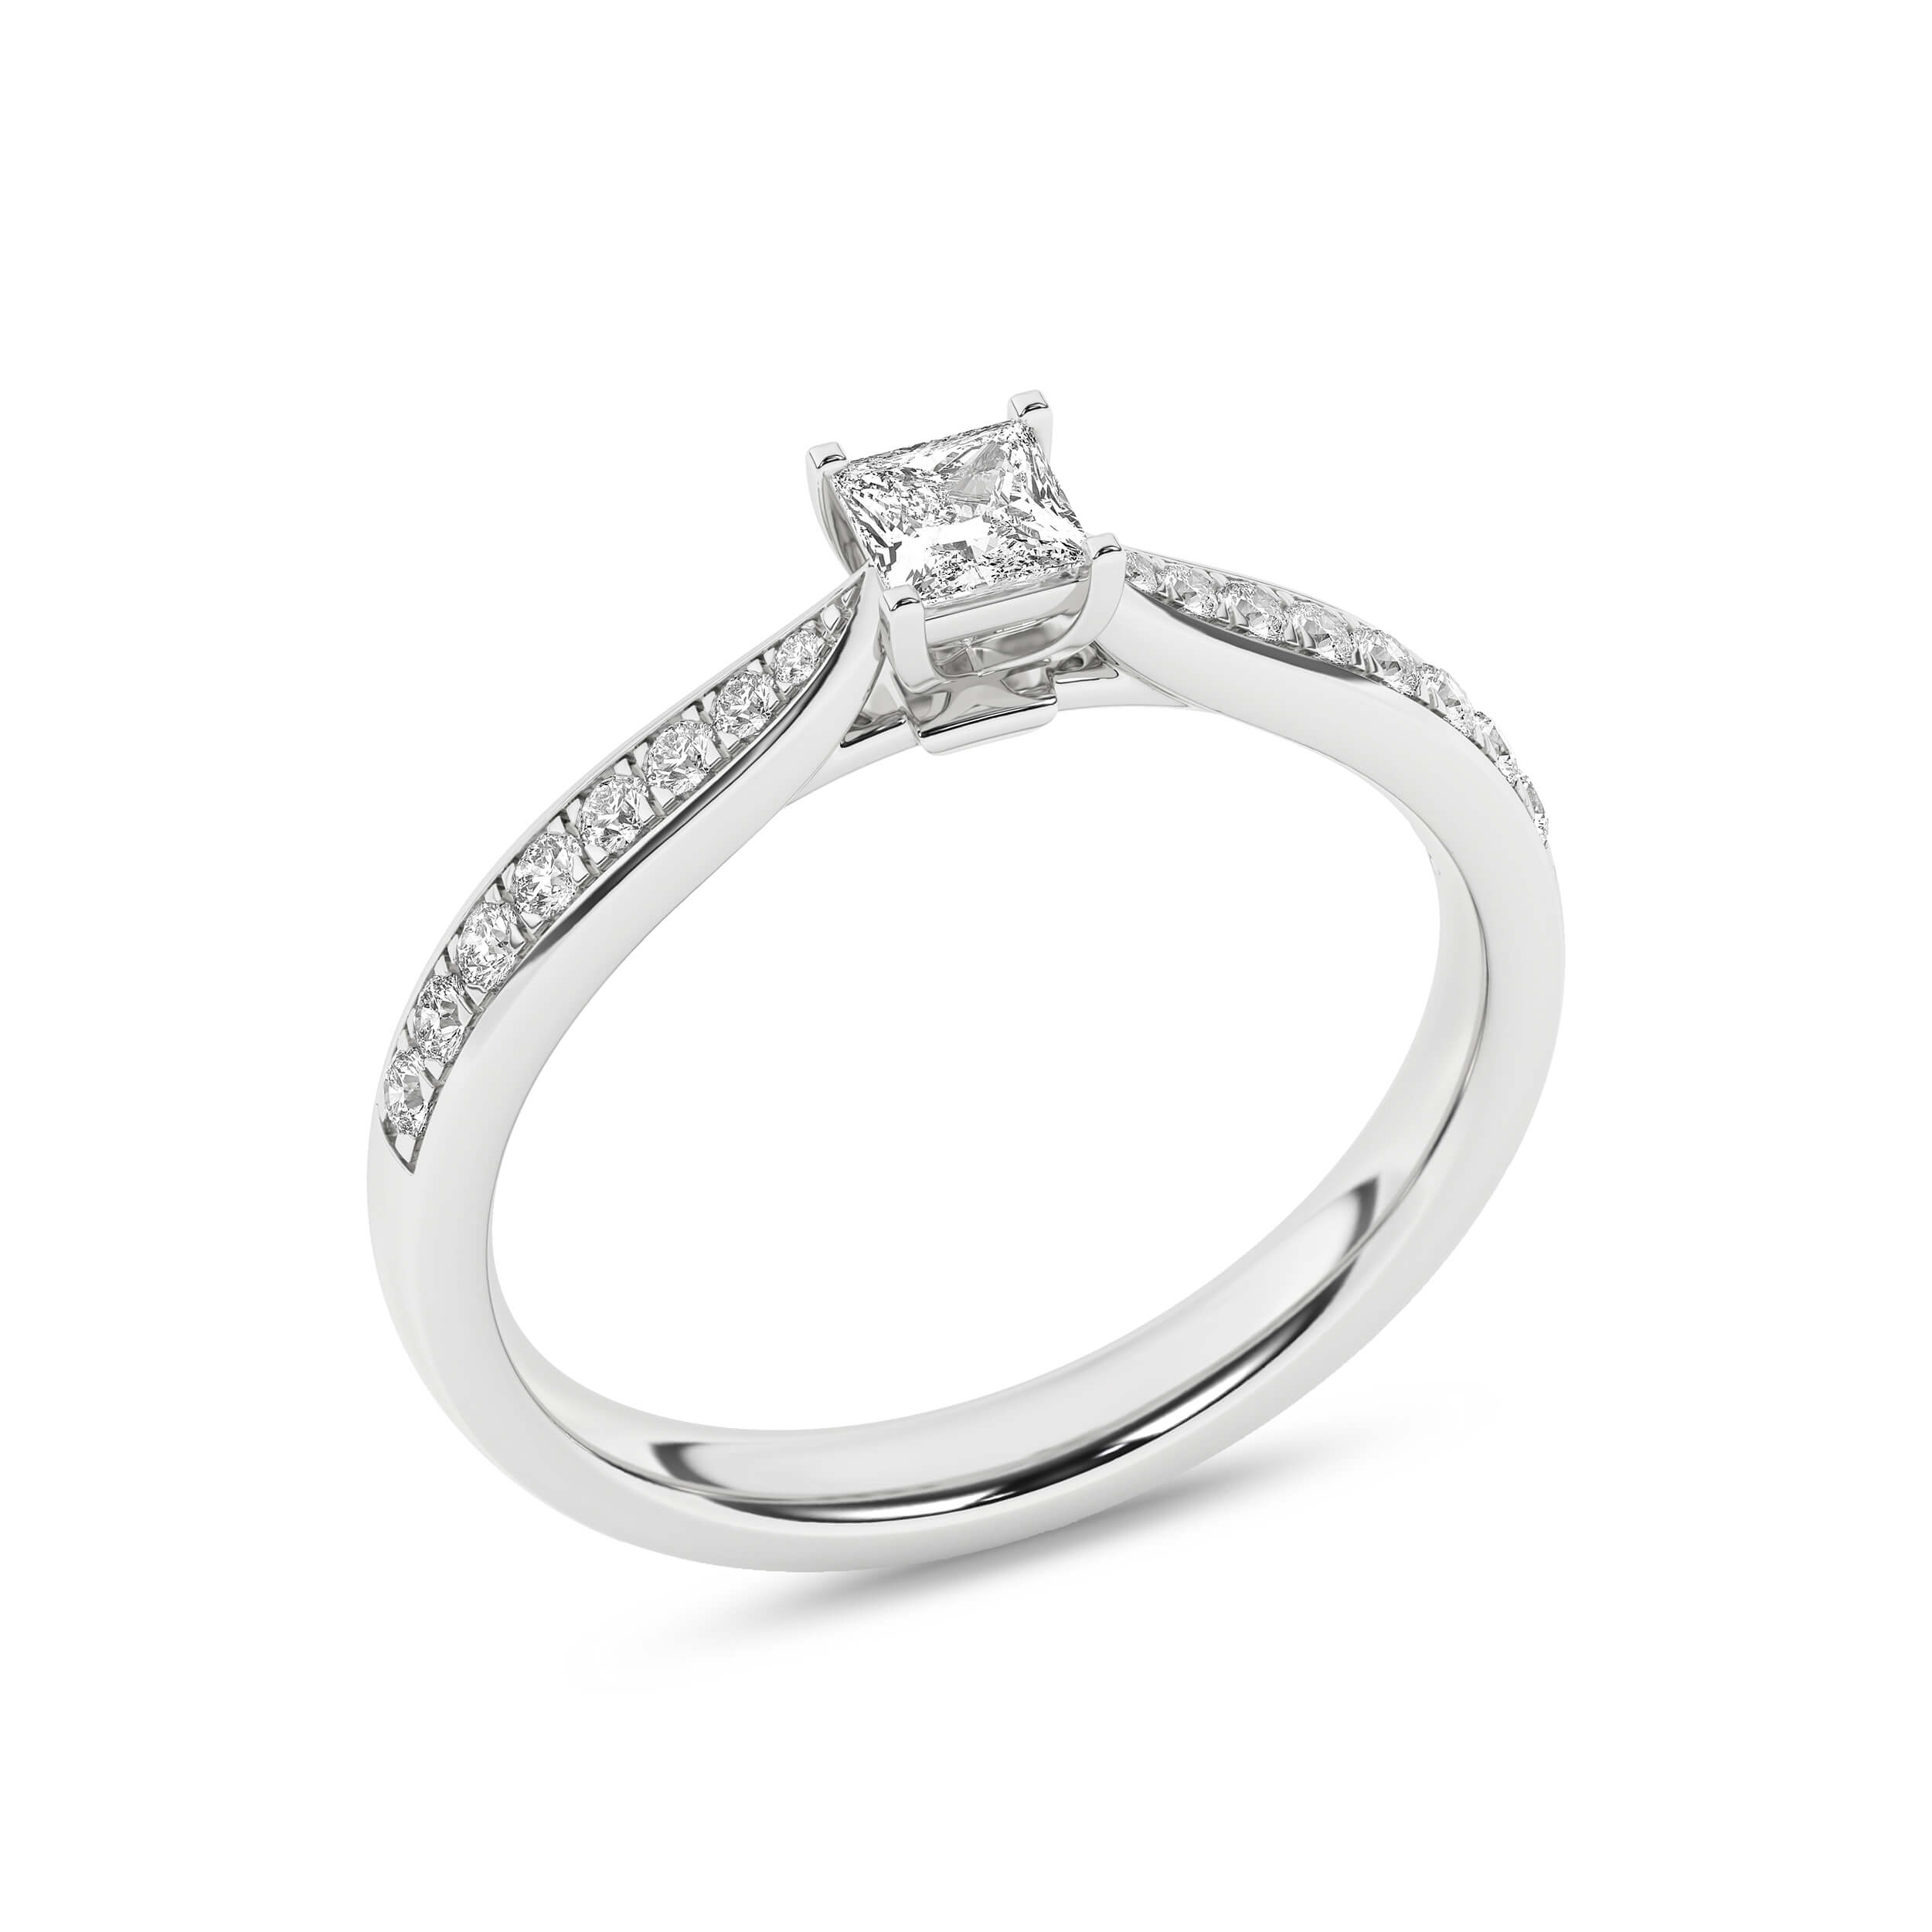 Inel de logodna din Aur Alb 14K cu Diamante 0.40Ct, articol RB17684EG, previzualizare foto 4